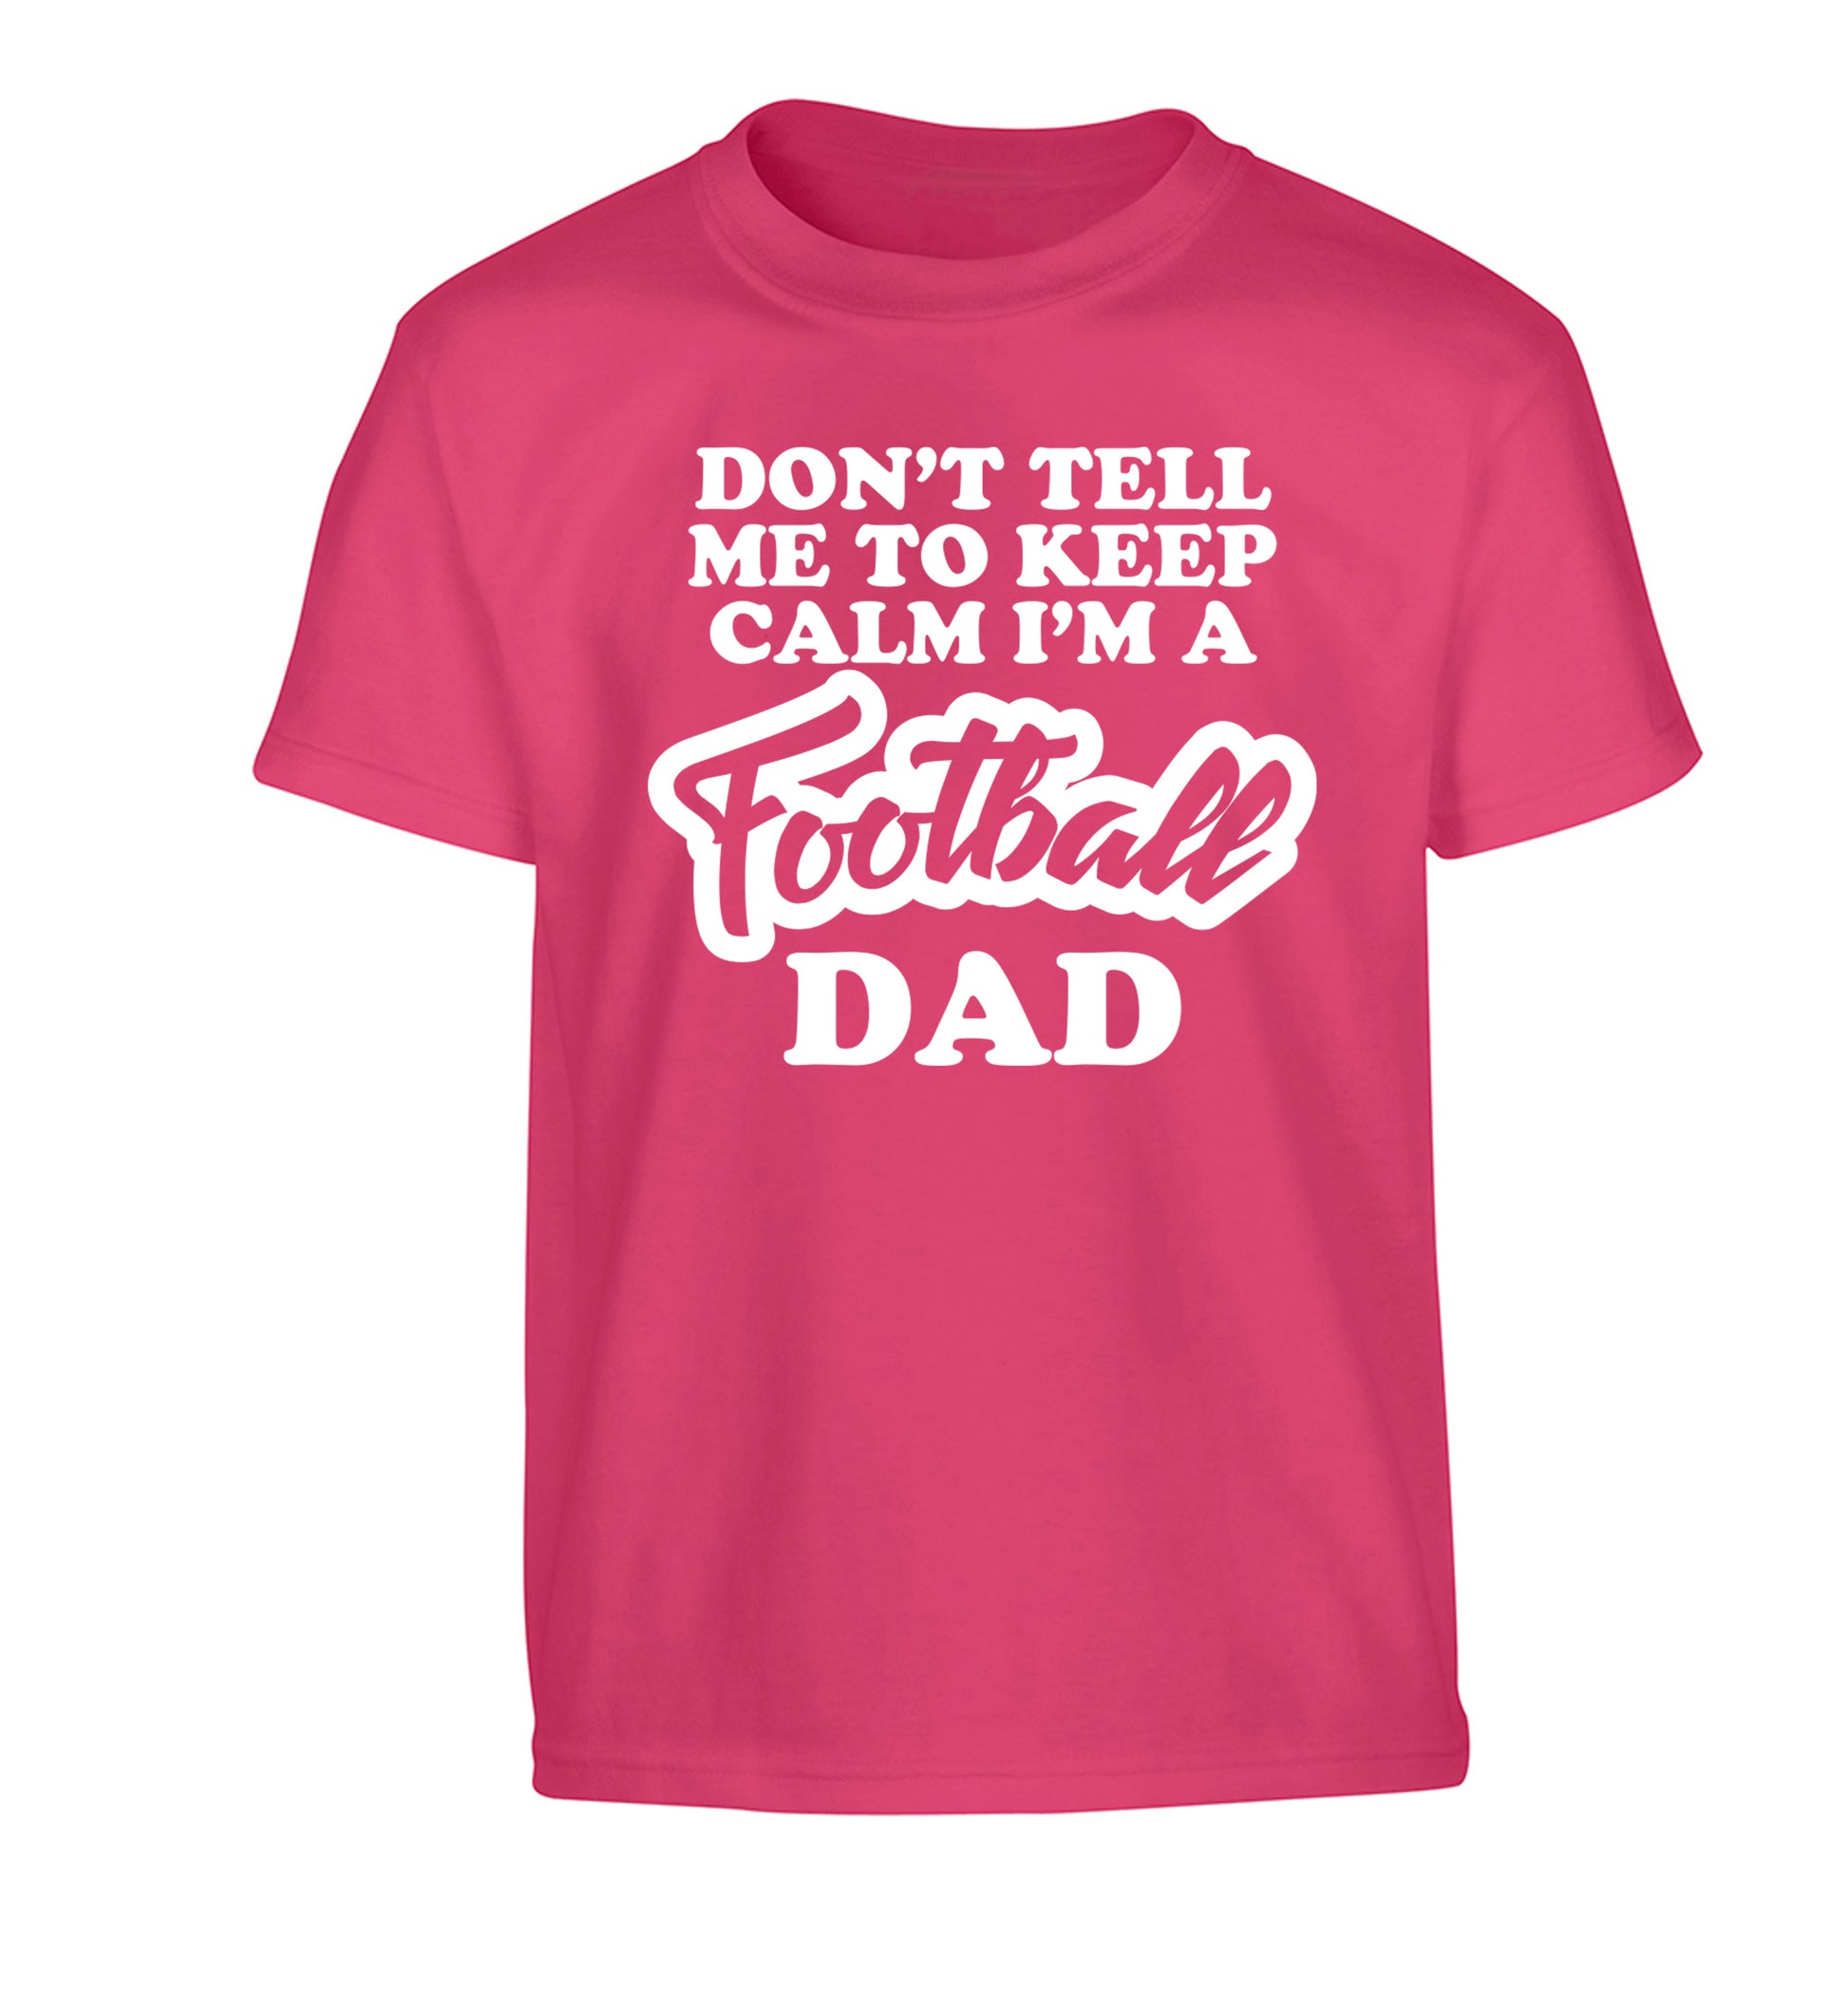 Don't tell me to keep calm I'm a football grandad Children's pink Tshirt 12-14 Years